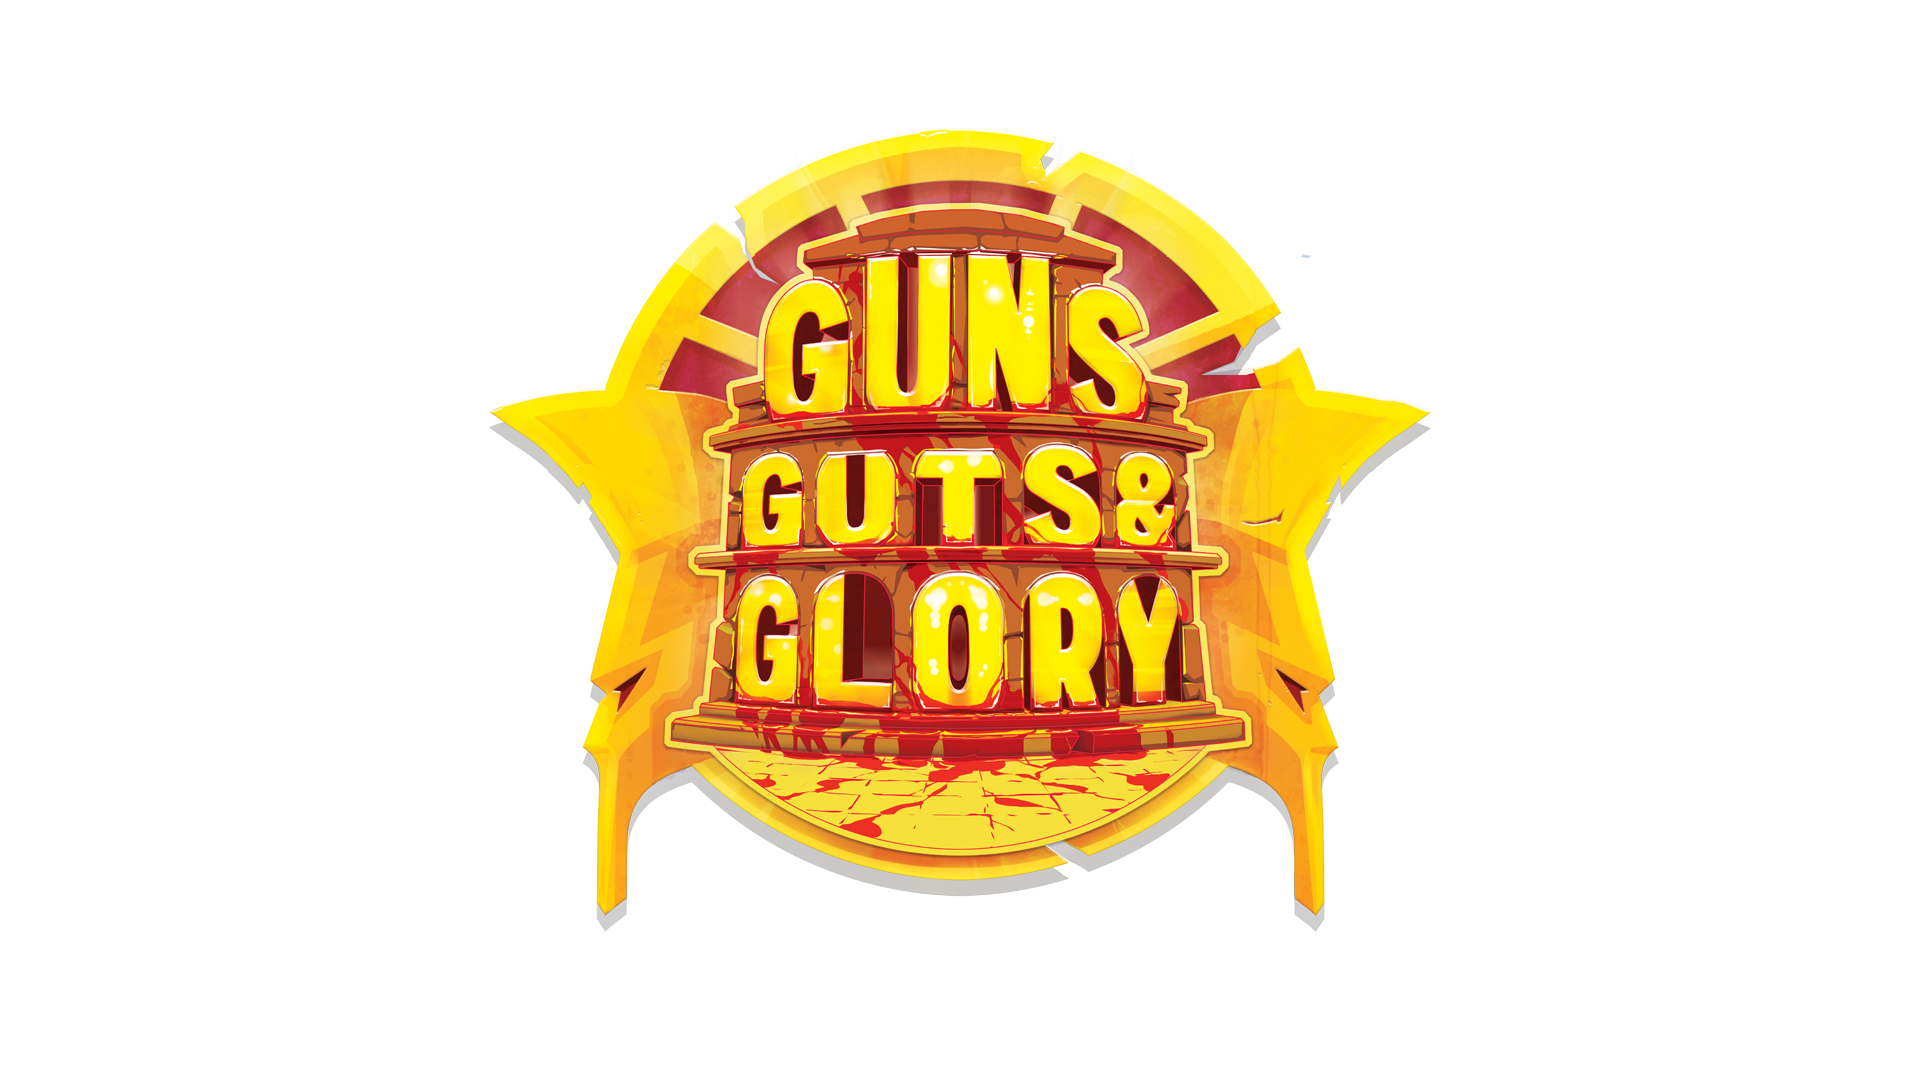 Guns Guts & Glory